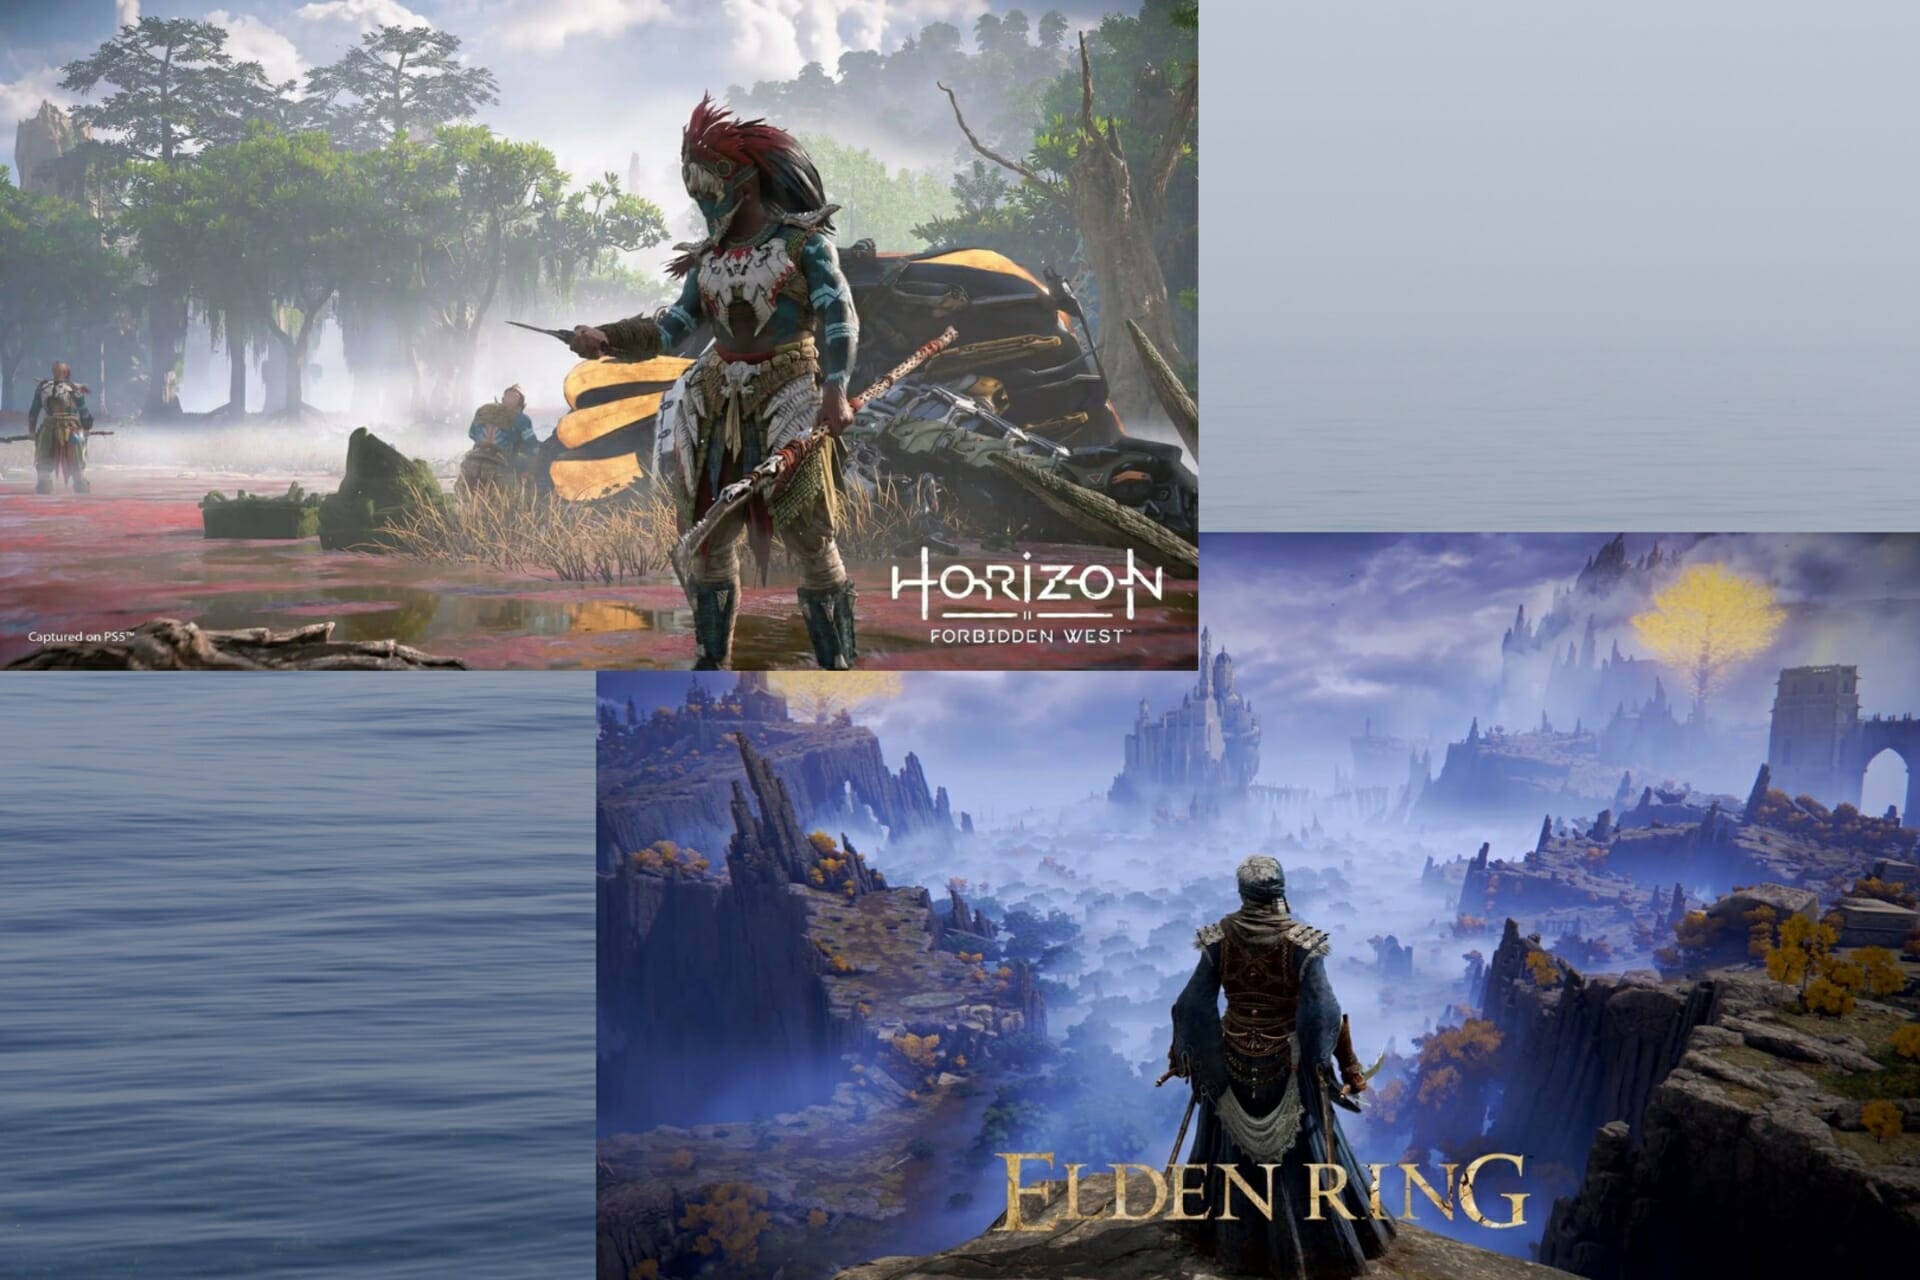 Horizon Forbidden West vs Elden Ring: Which should I choose?